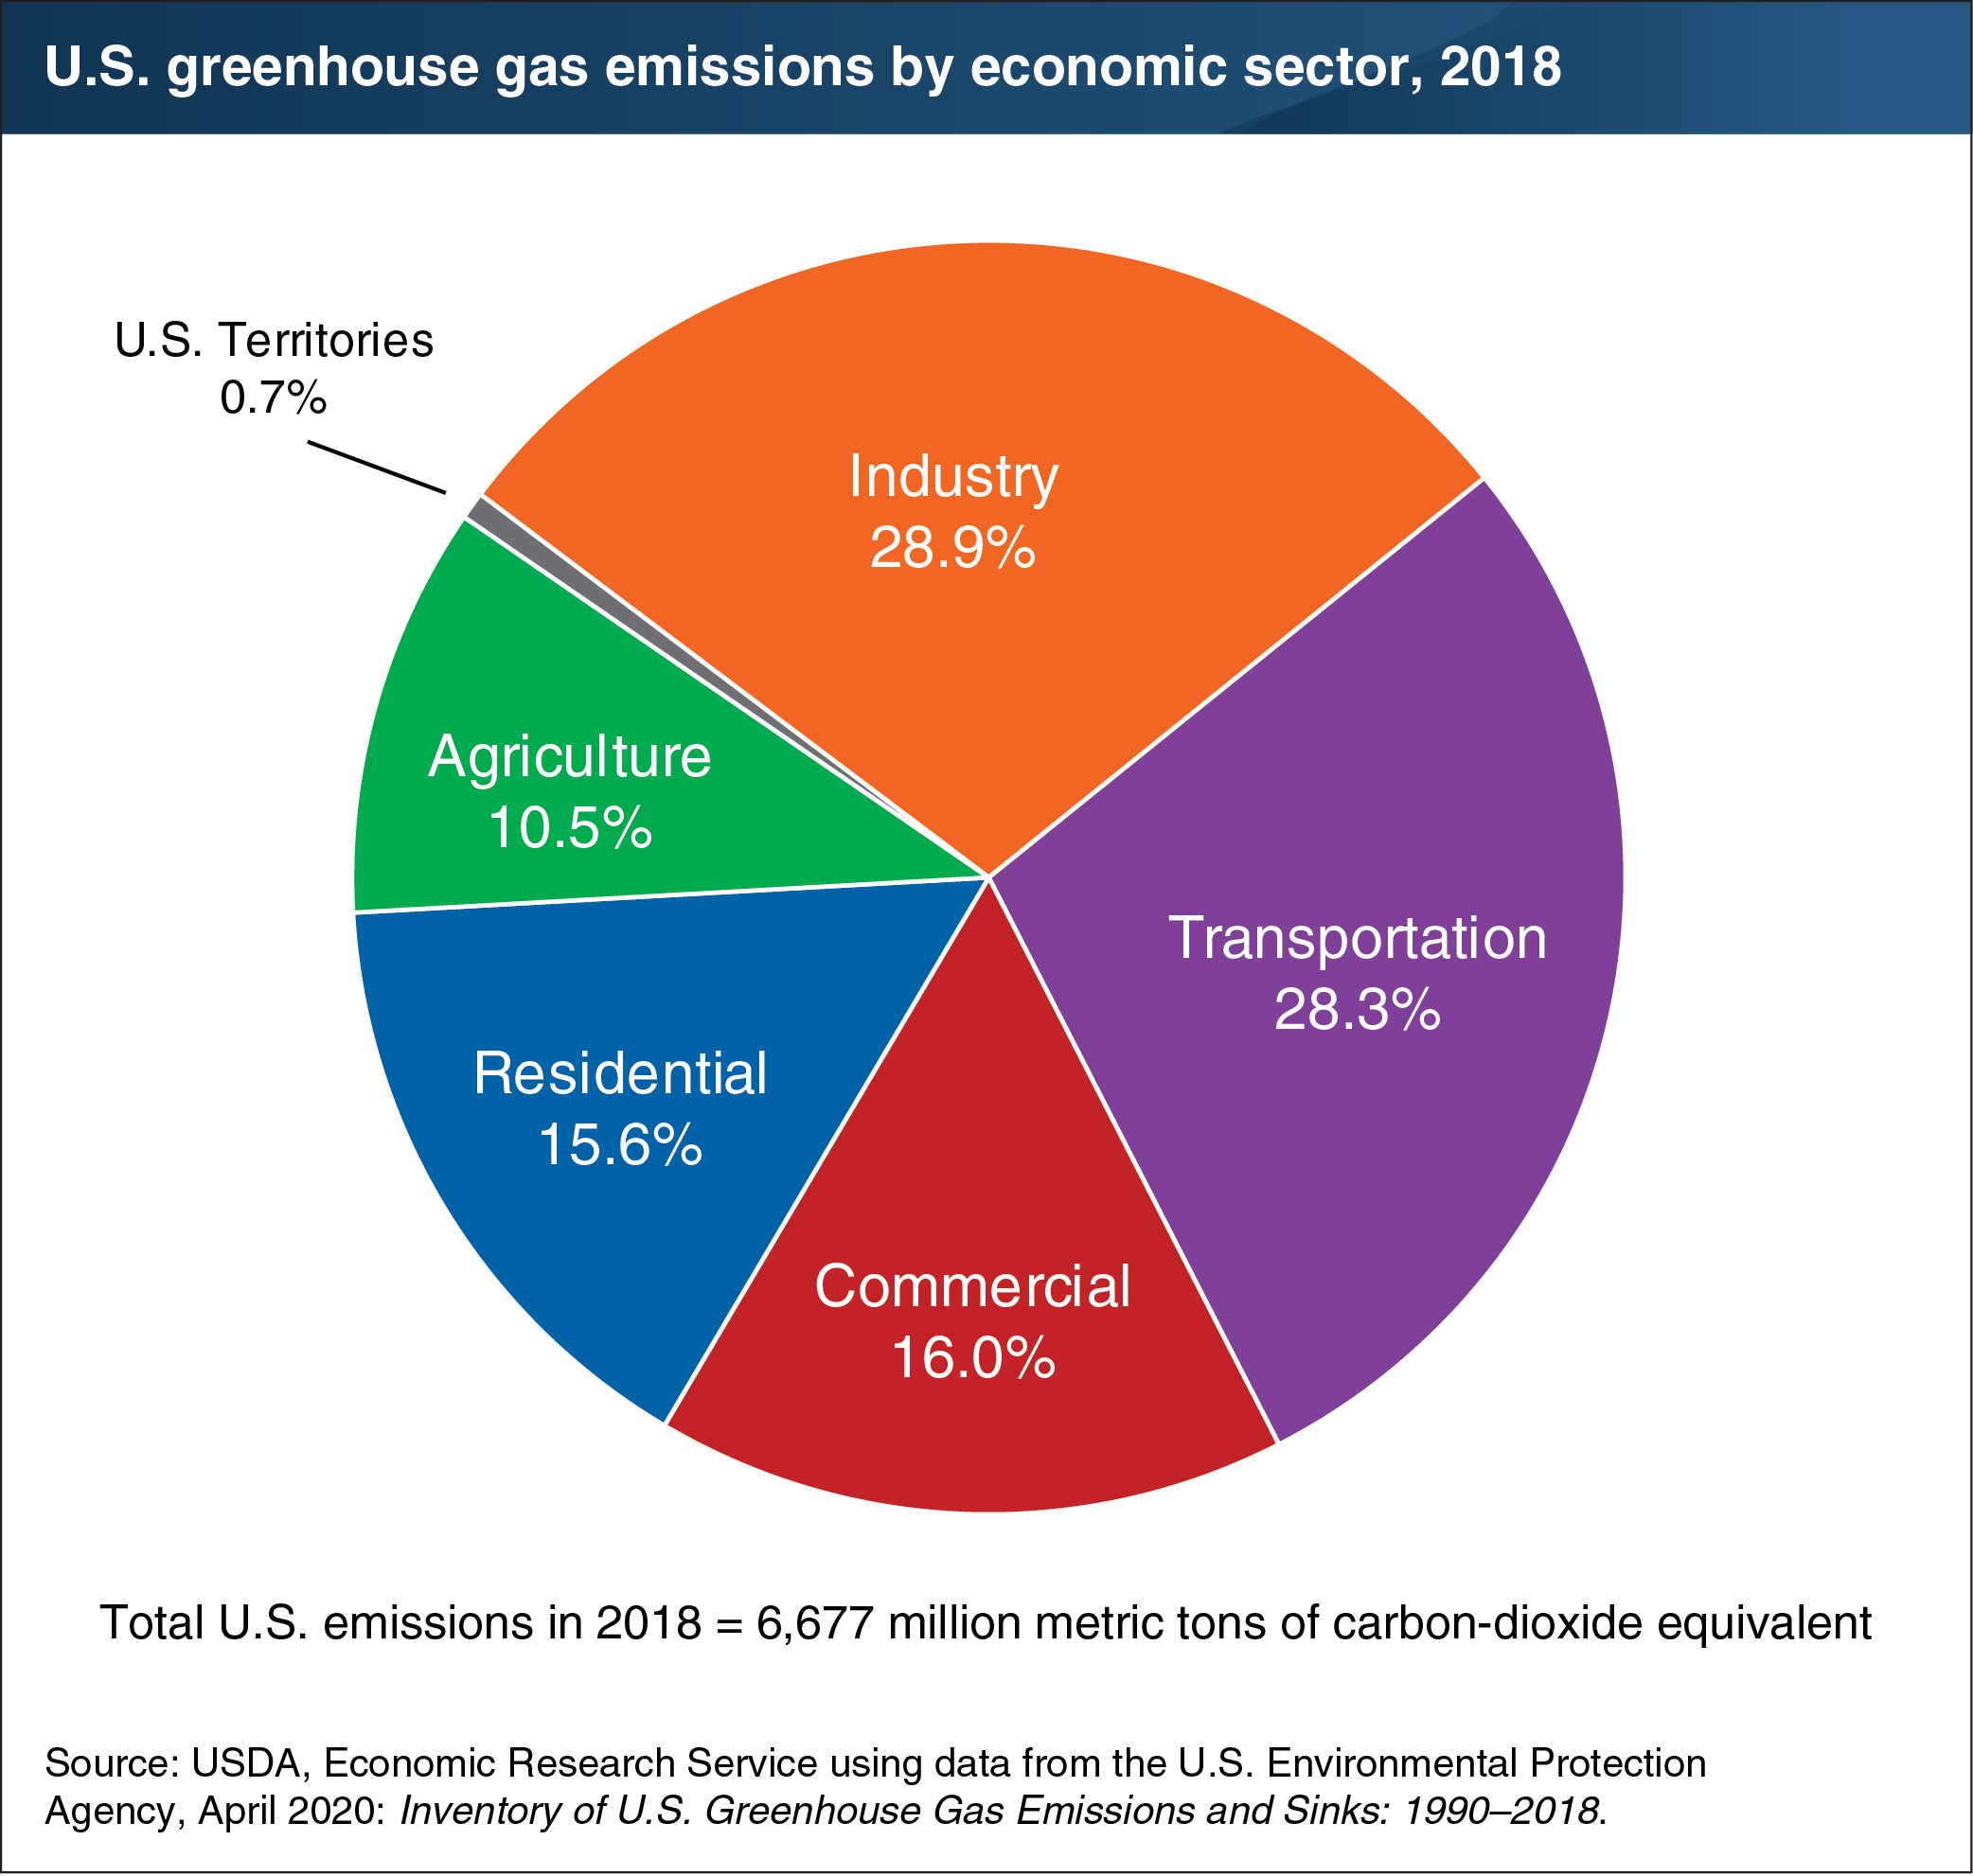 Greenhouse Gas Emissions